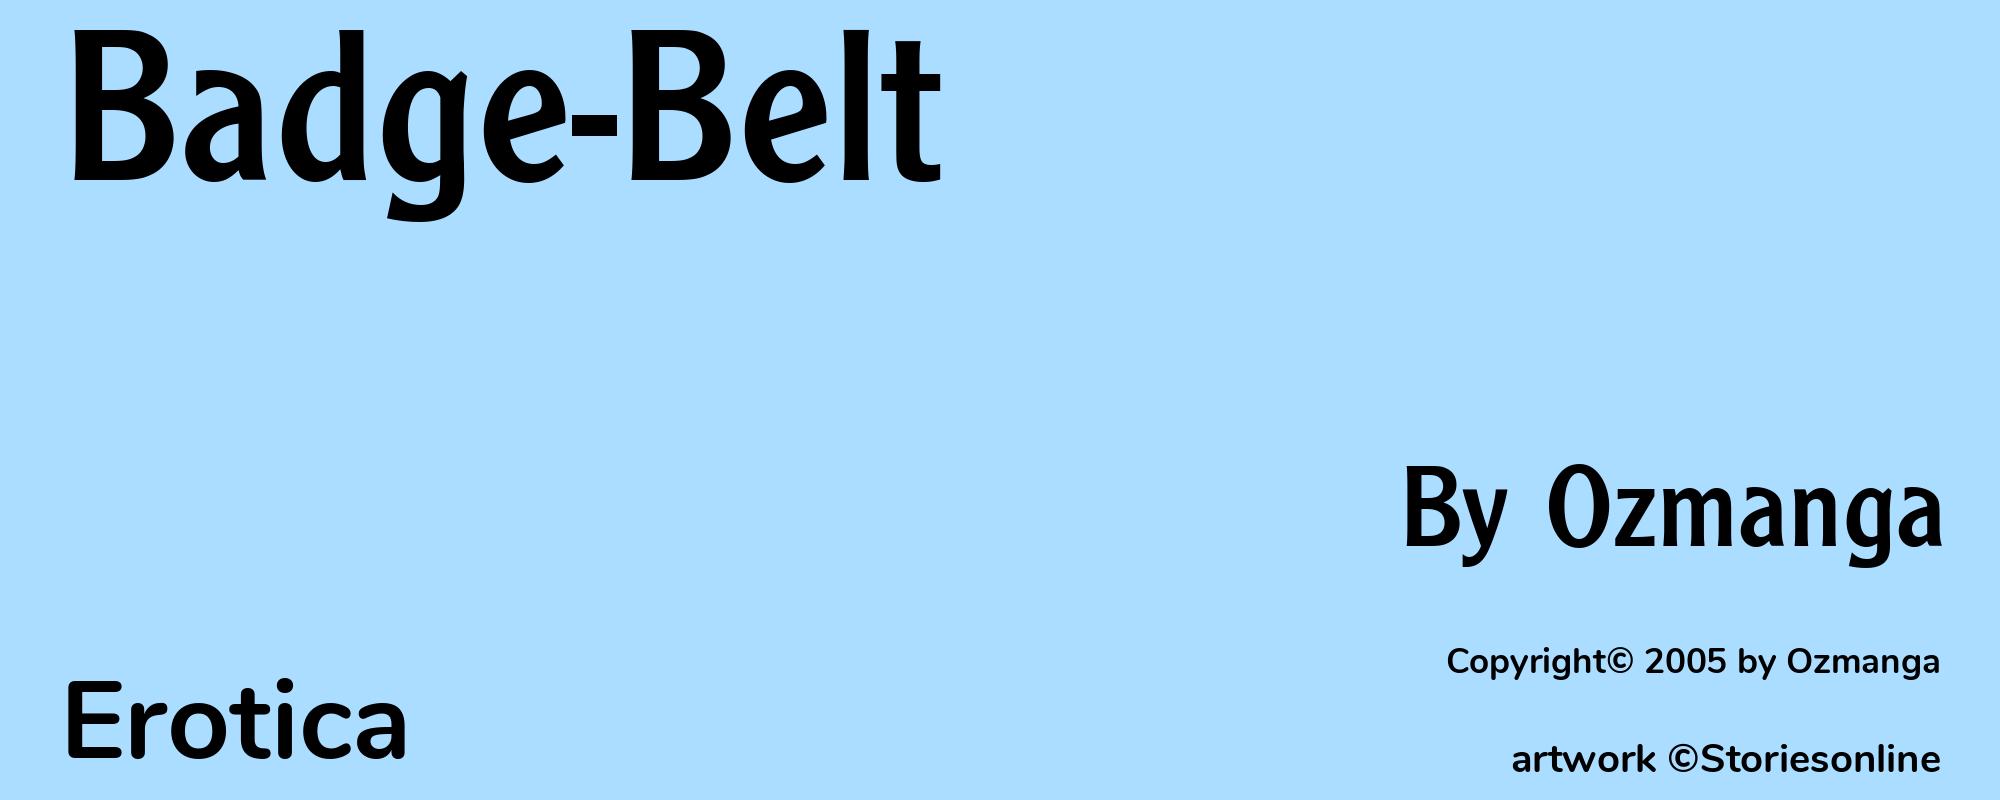 Badge-Belt - Cover